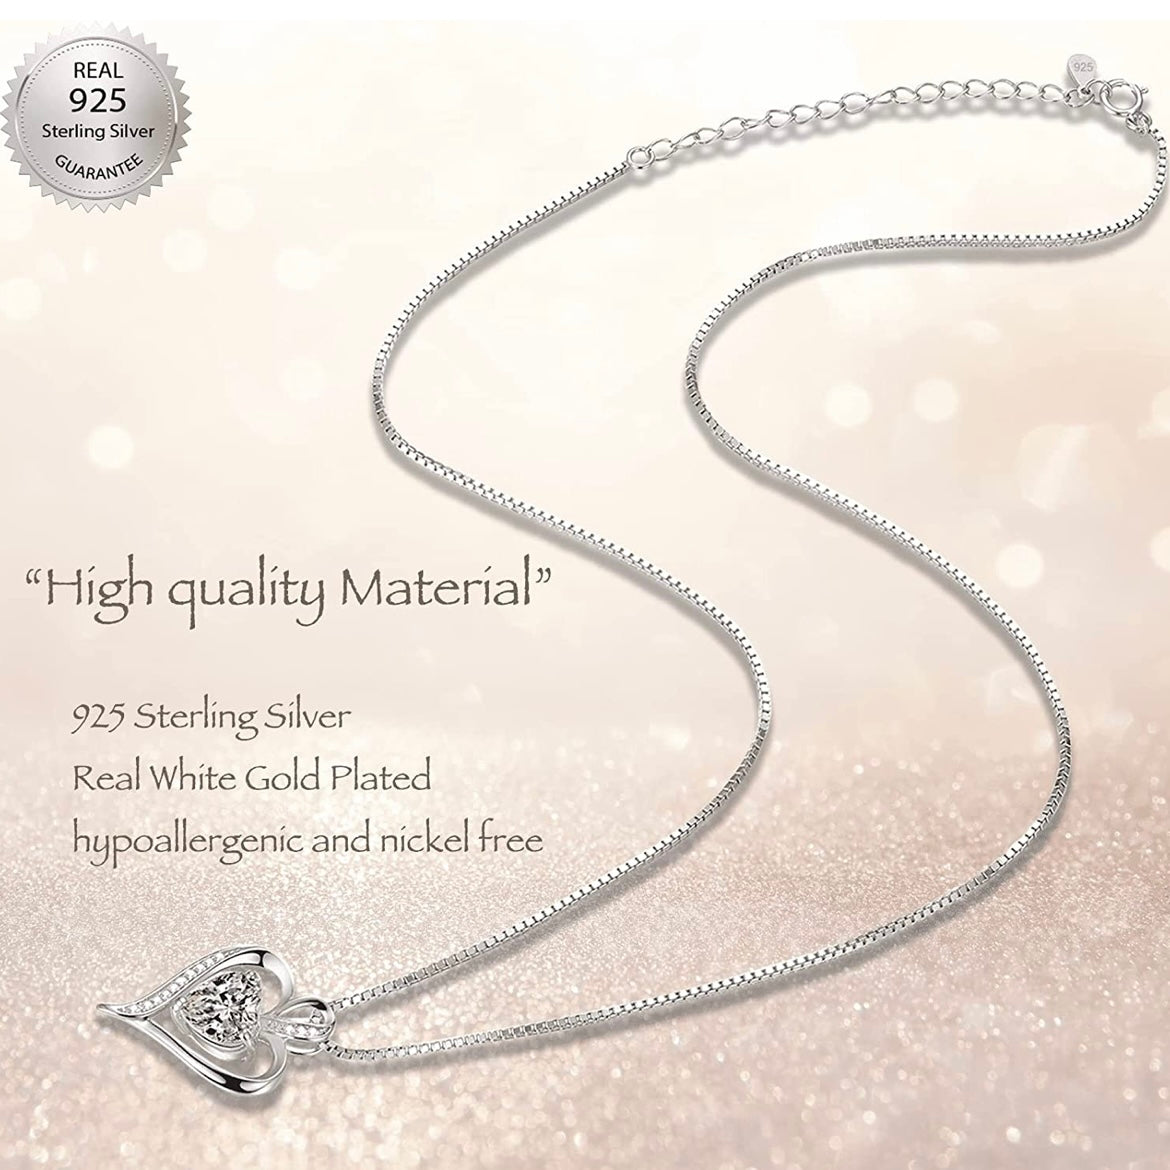 LAVUMO Women's Silver Heart Pendant Chain Necklace 925 Sterling Silver